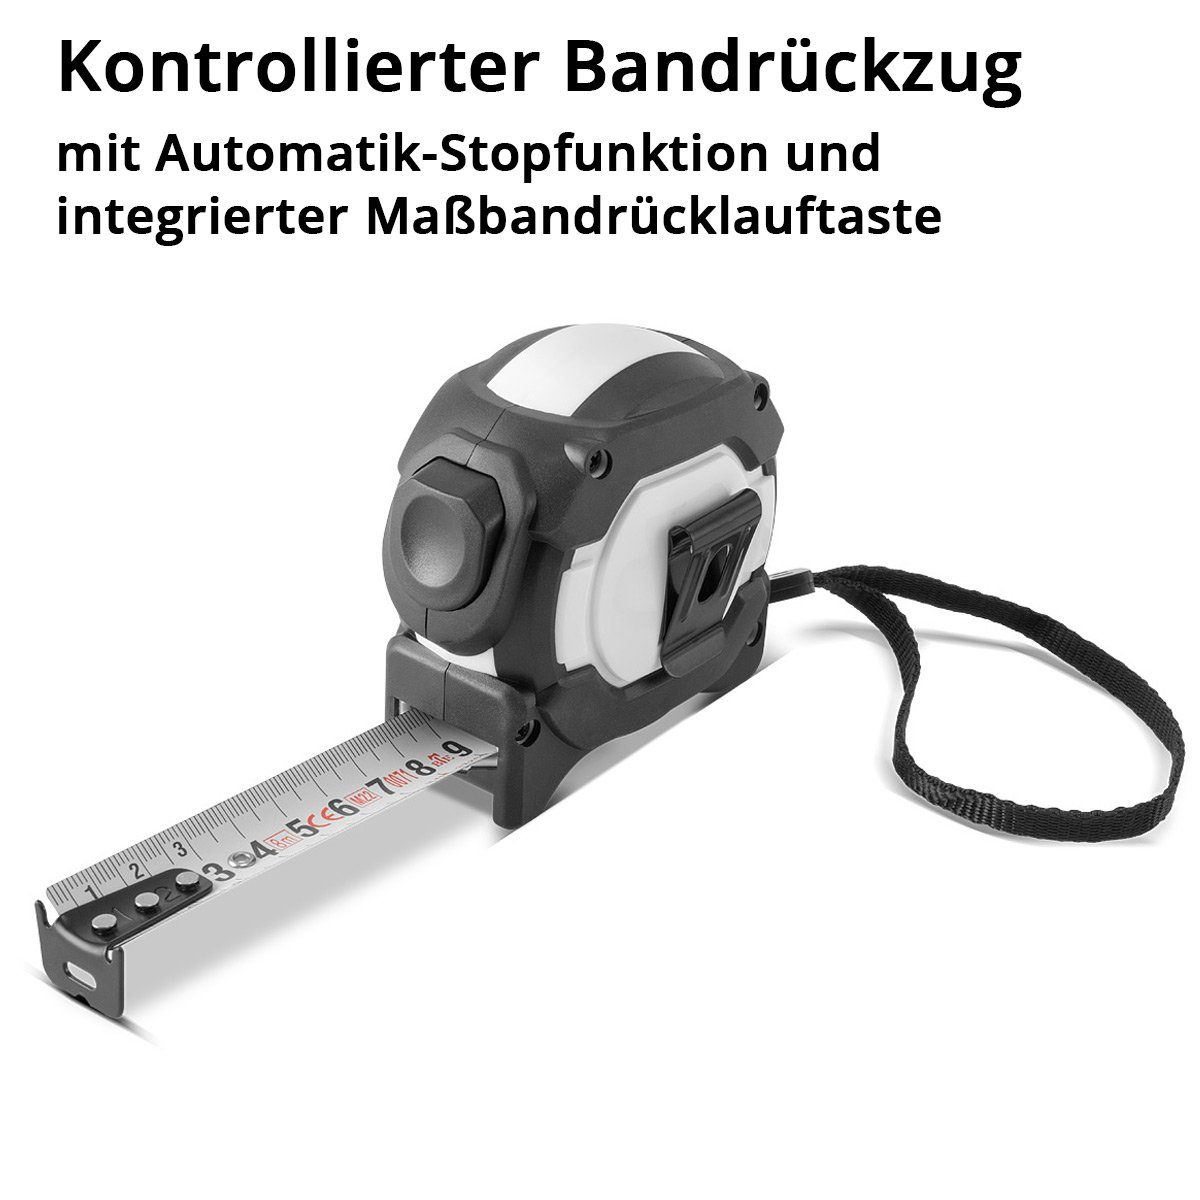 Maßband, Messband mit Meter STAHLWERK 3 Maßband Bandmaß Gürtelclip /